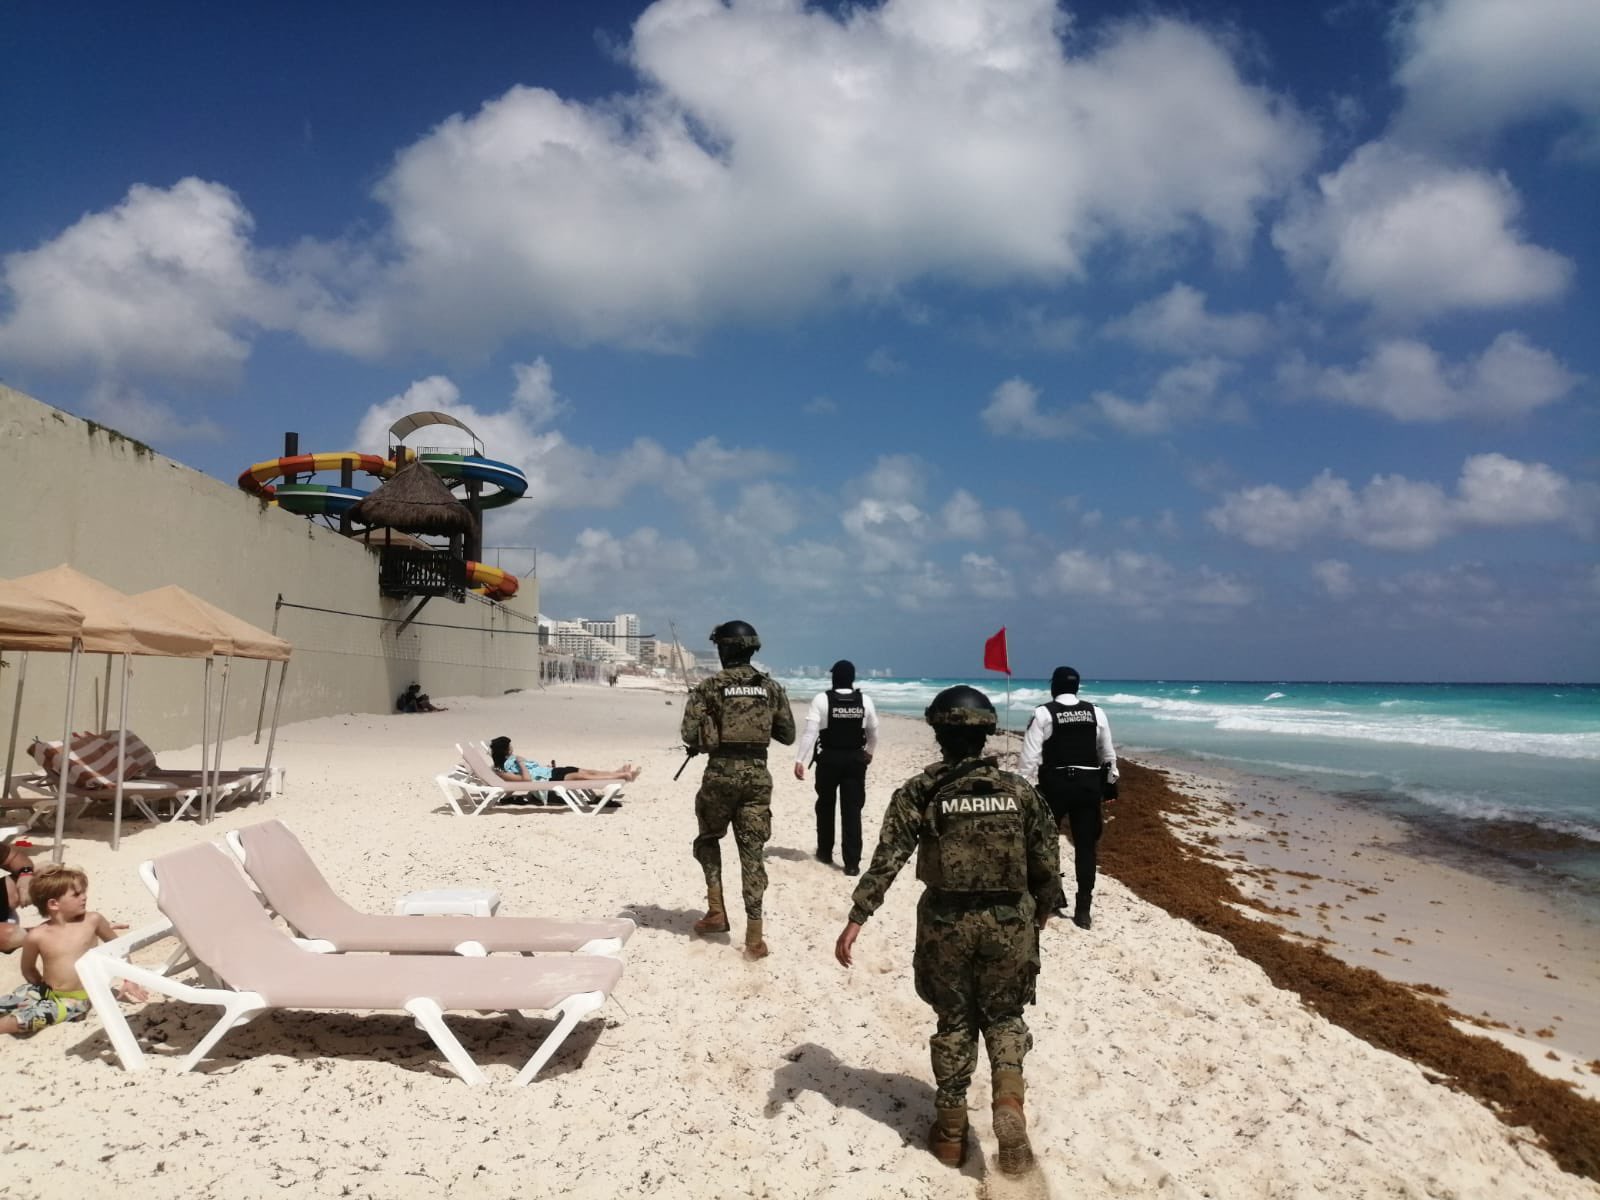 Elementos policiacos refuerzan vigilancia en playas de Cancún tras riña entre ambulantes 